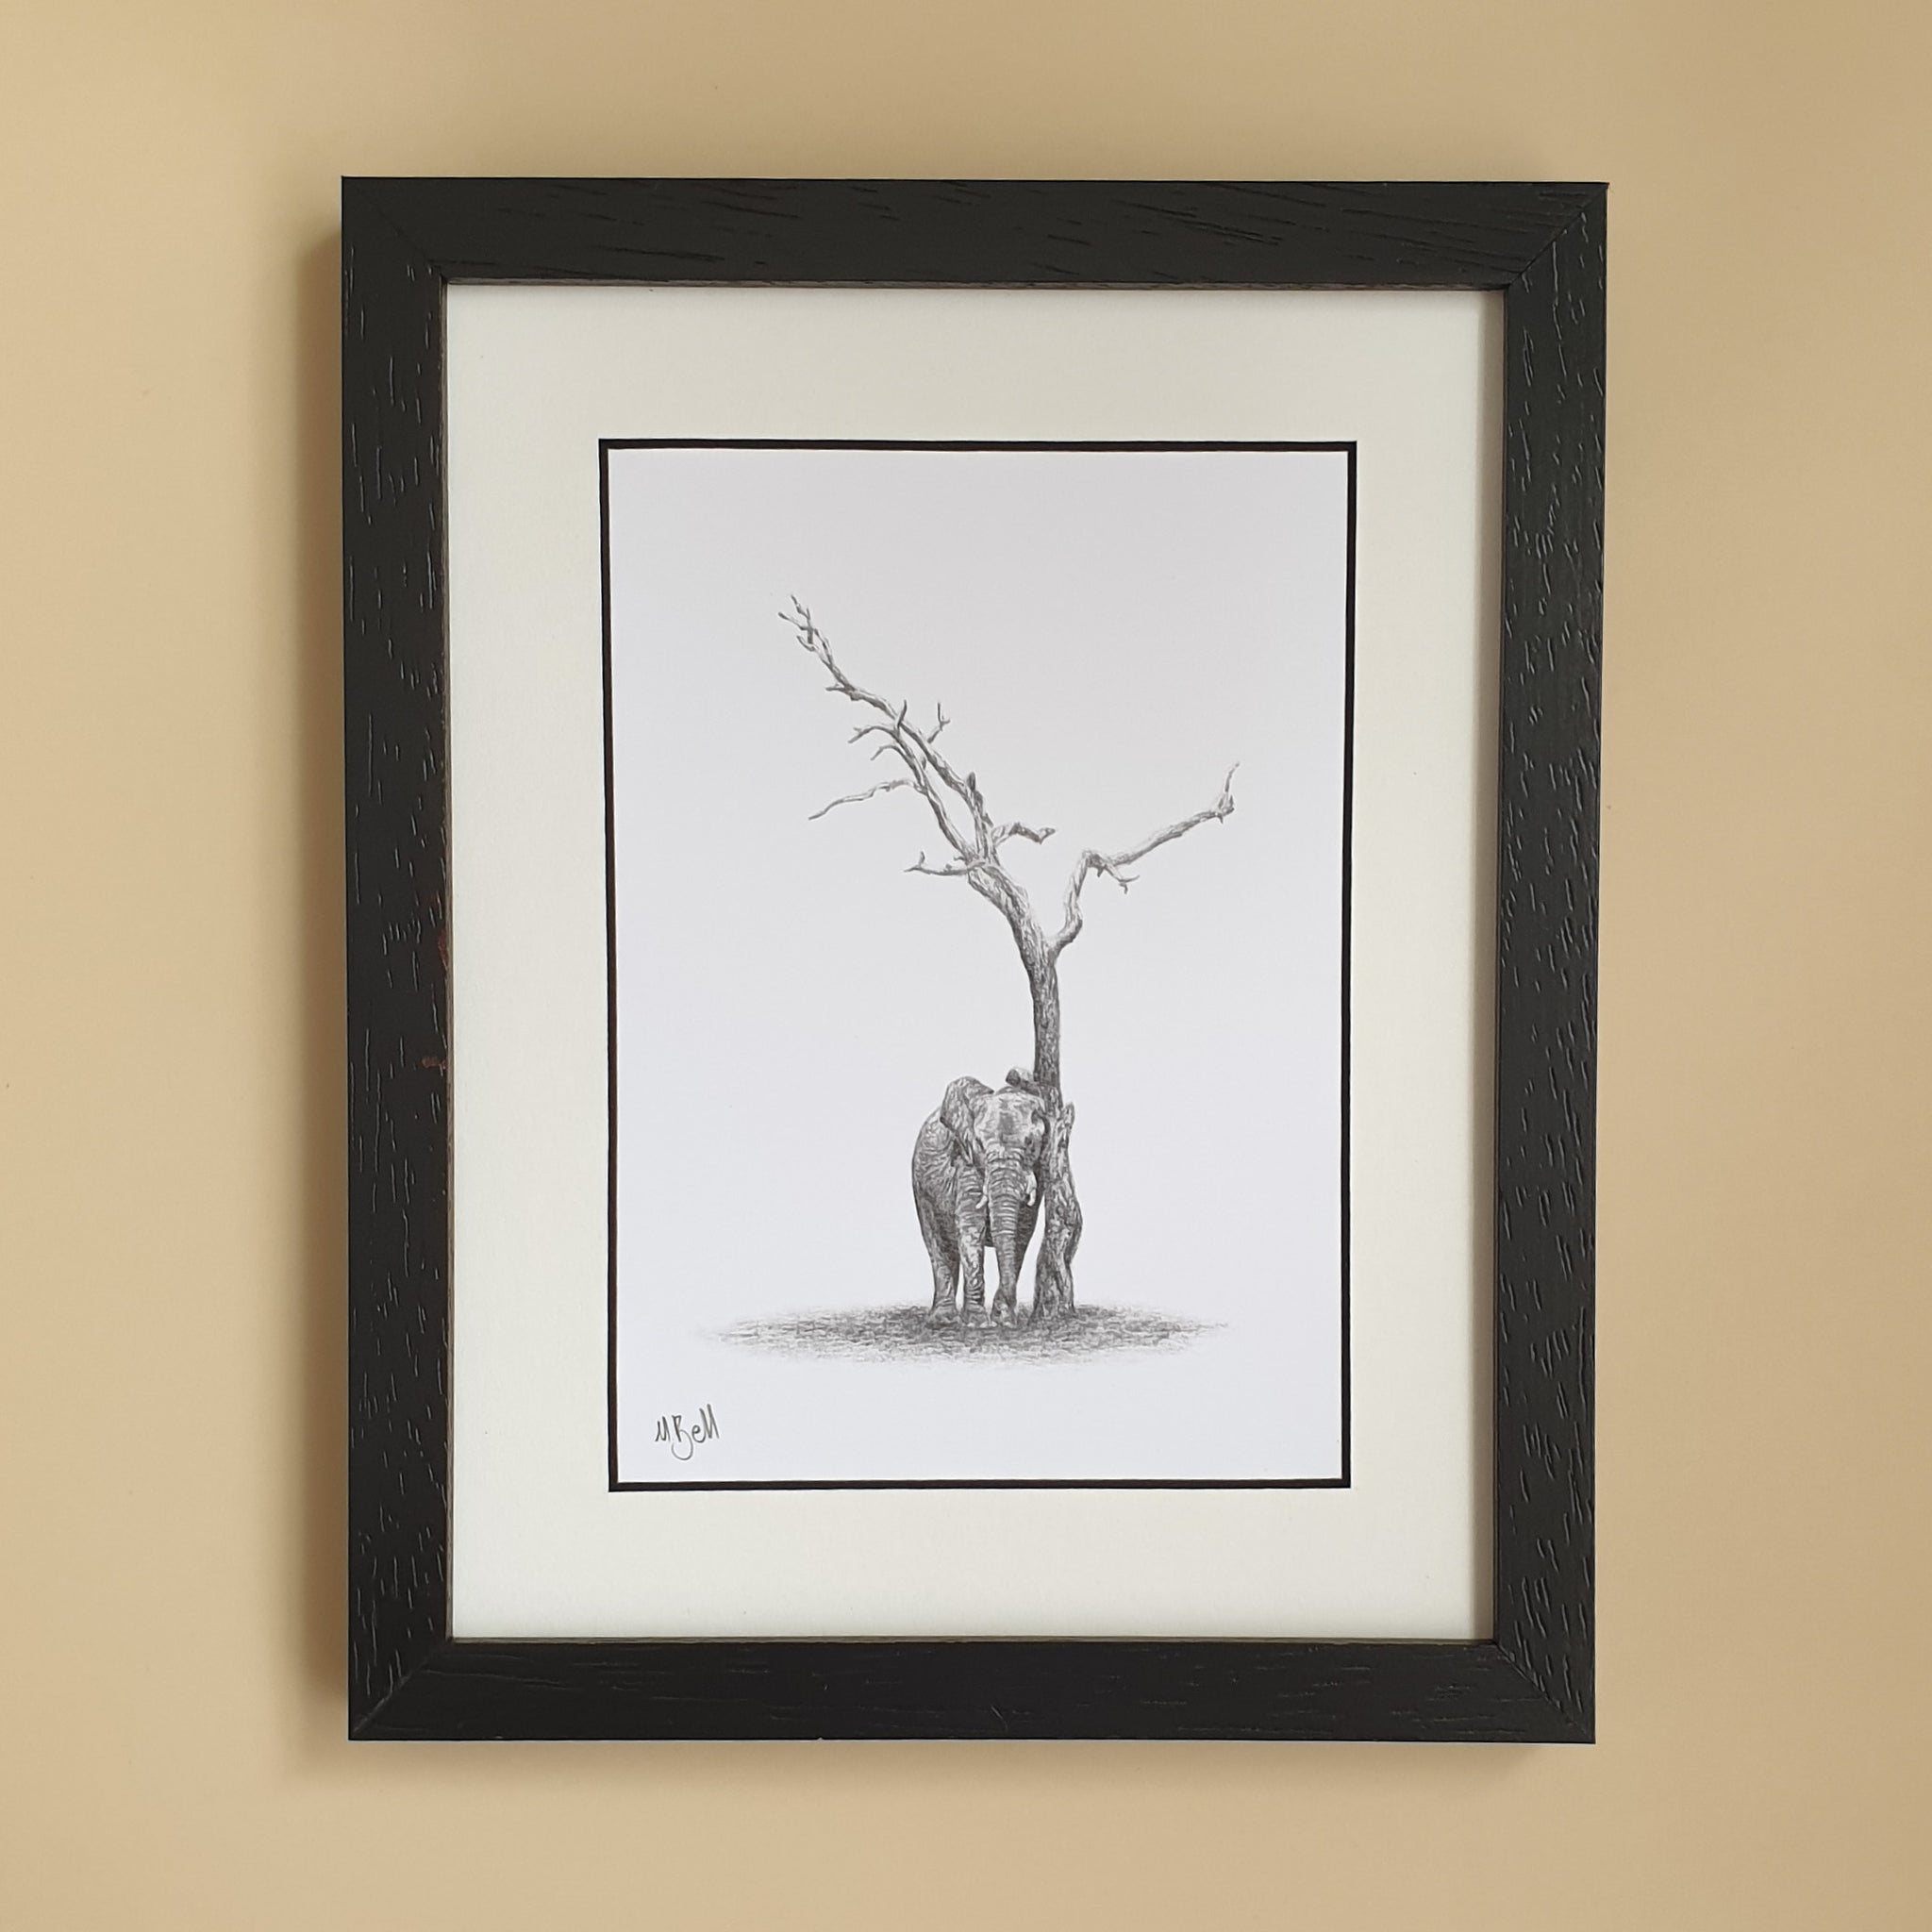 Framed artwork of an African elephant